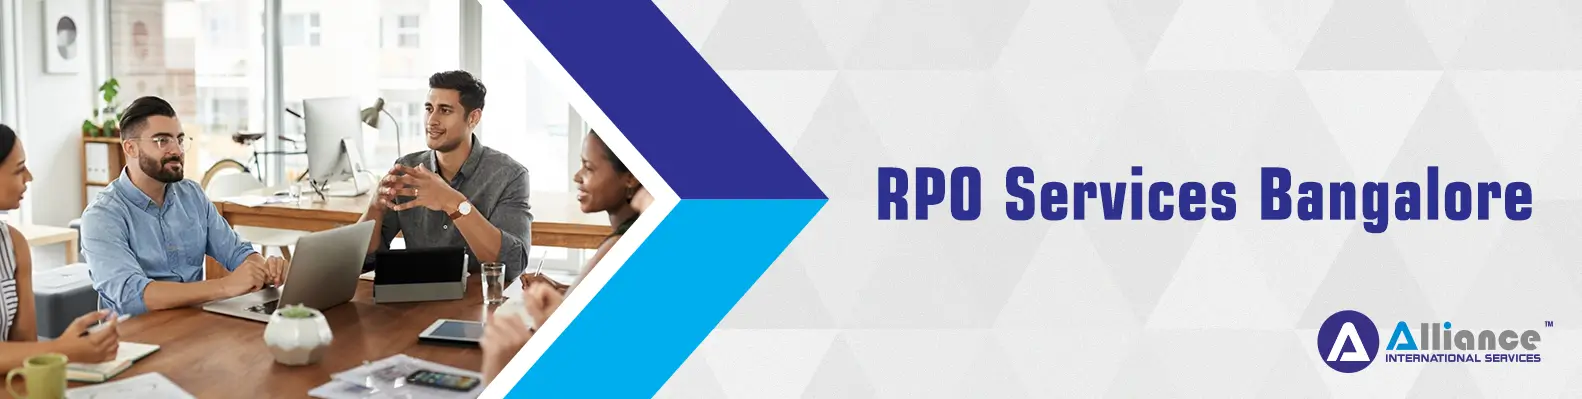 RPO Services Banglore